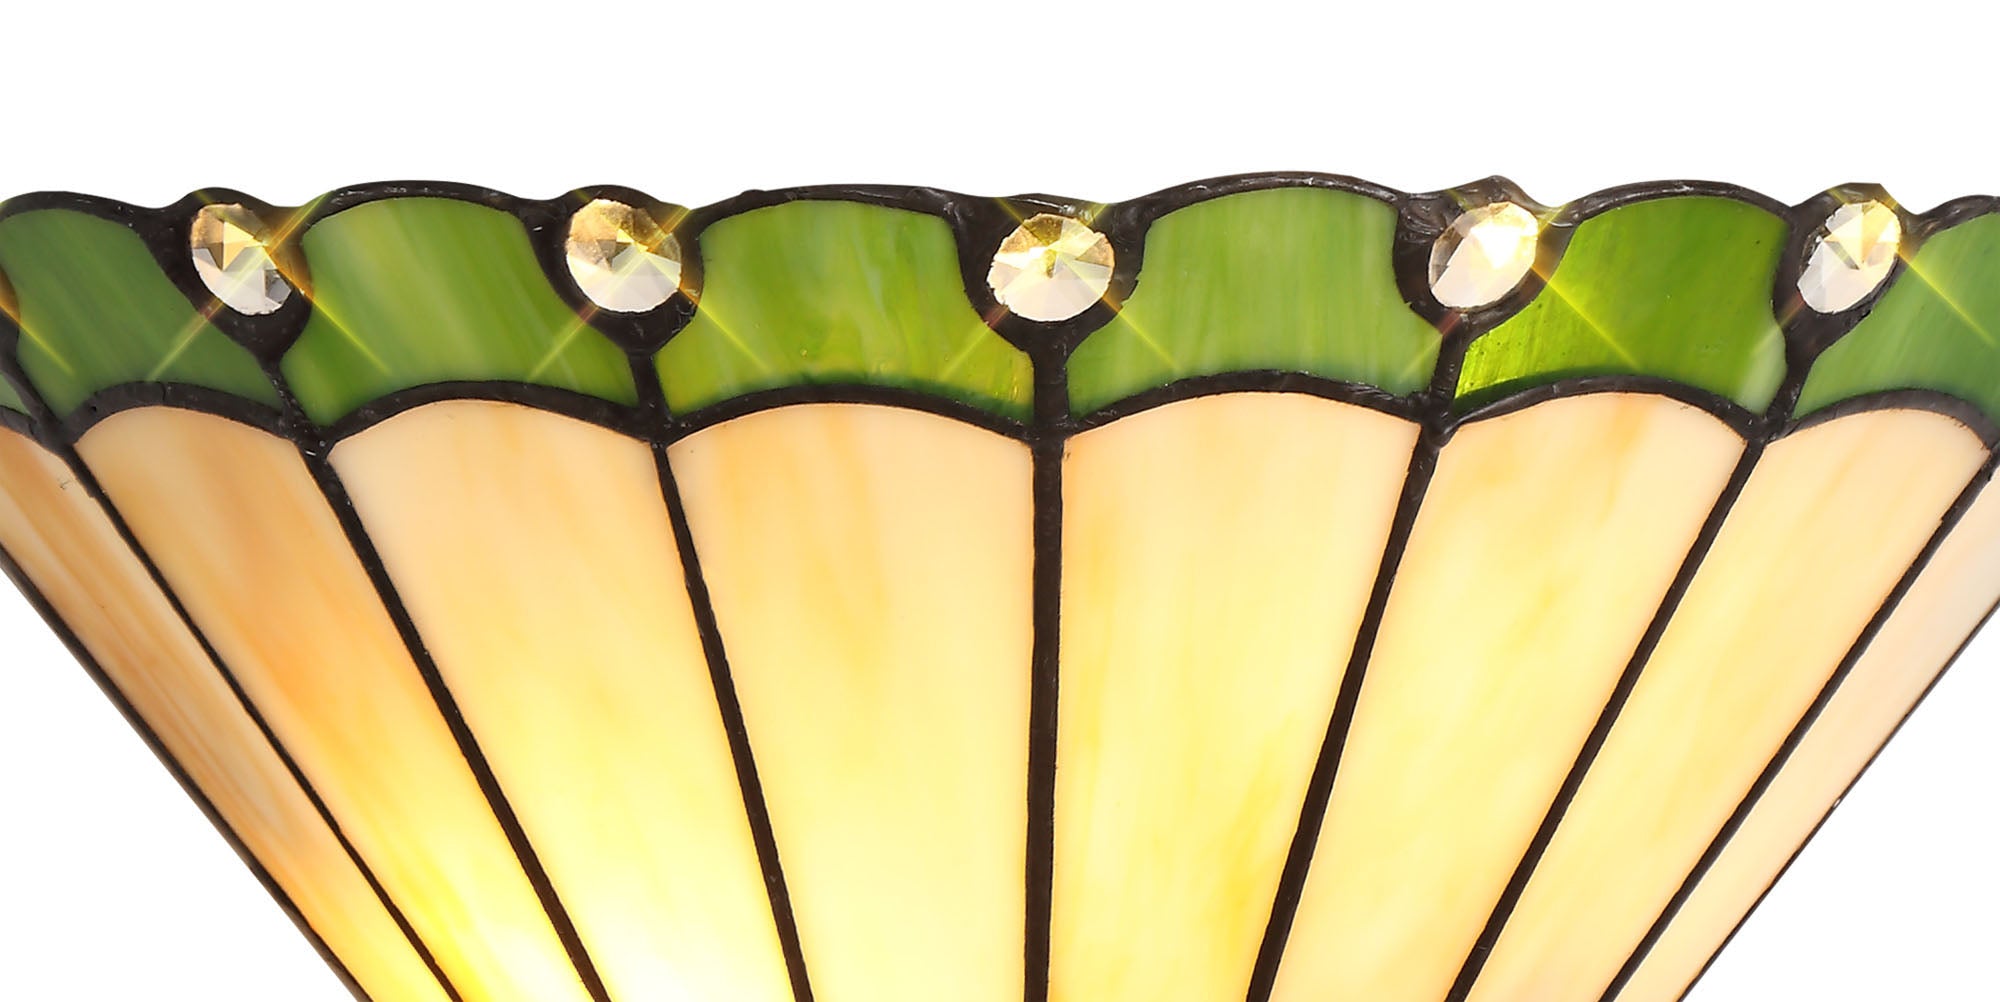 Umbrella Tiffany Wall Lamp, 2 x E14, Green/Crealm/Crystal